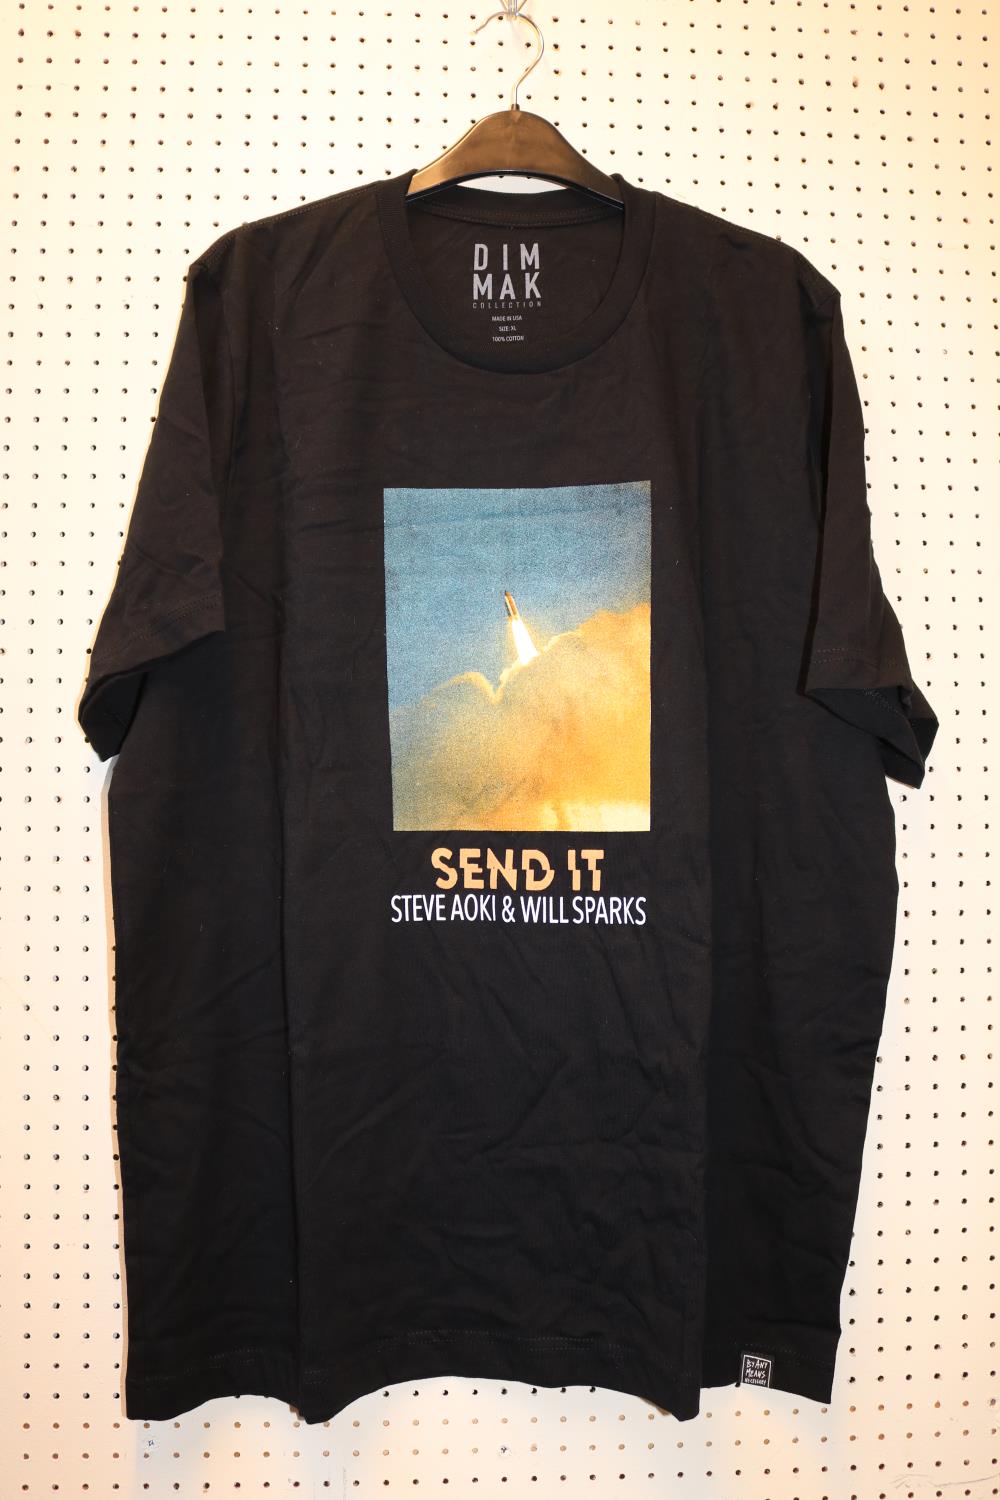 Steve Aoki Back pack, Dim Mak XL Steve Aoki & Will SParks T-Shirt, Just Hold On T-Shirt, Steve - Image 6 of 9